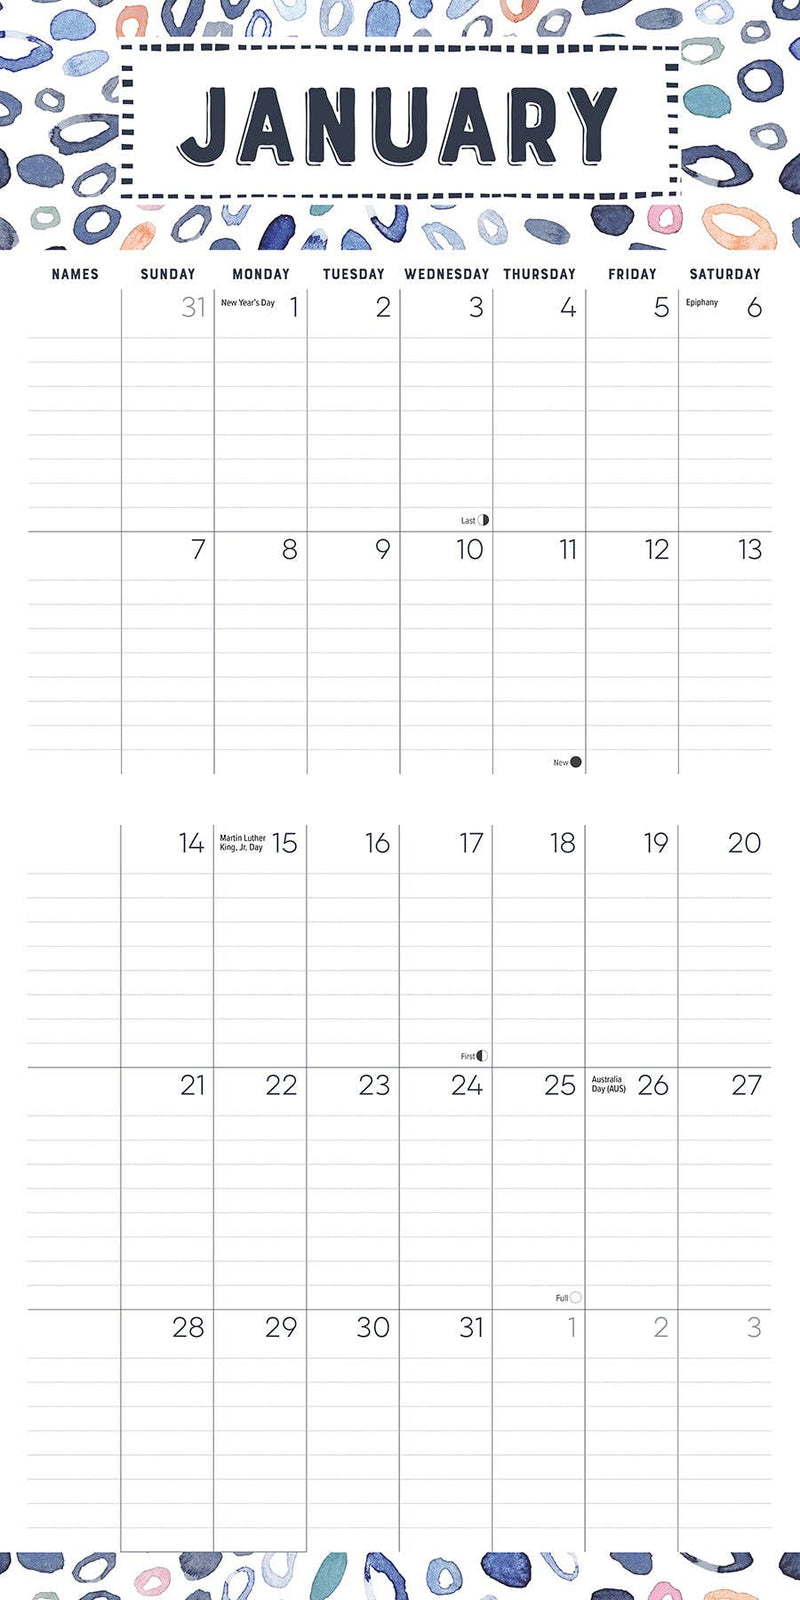 Family Planner 2024 Wall Calendar